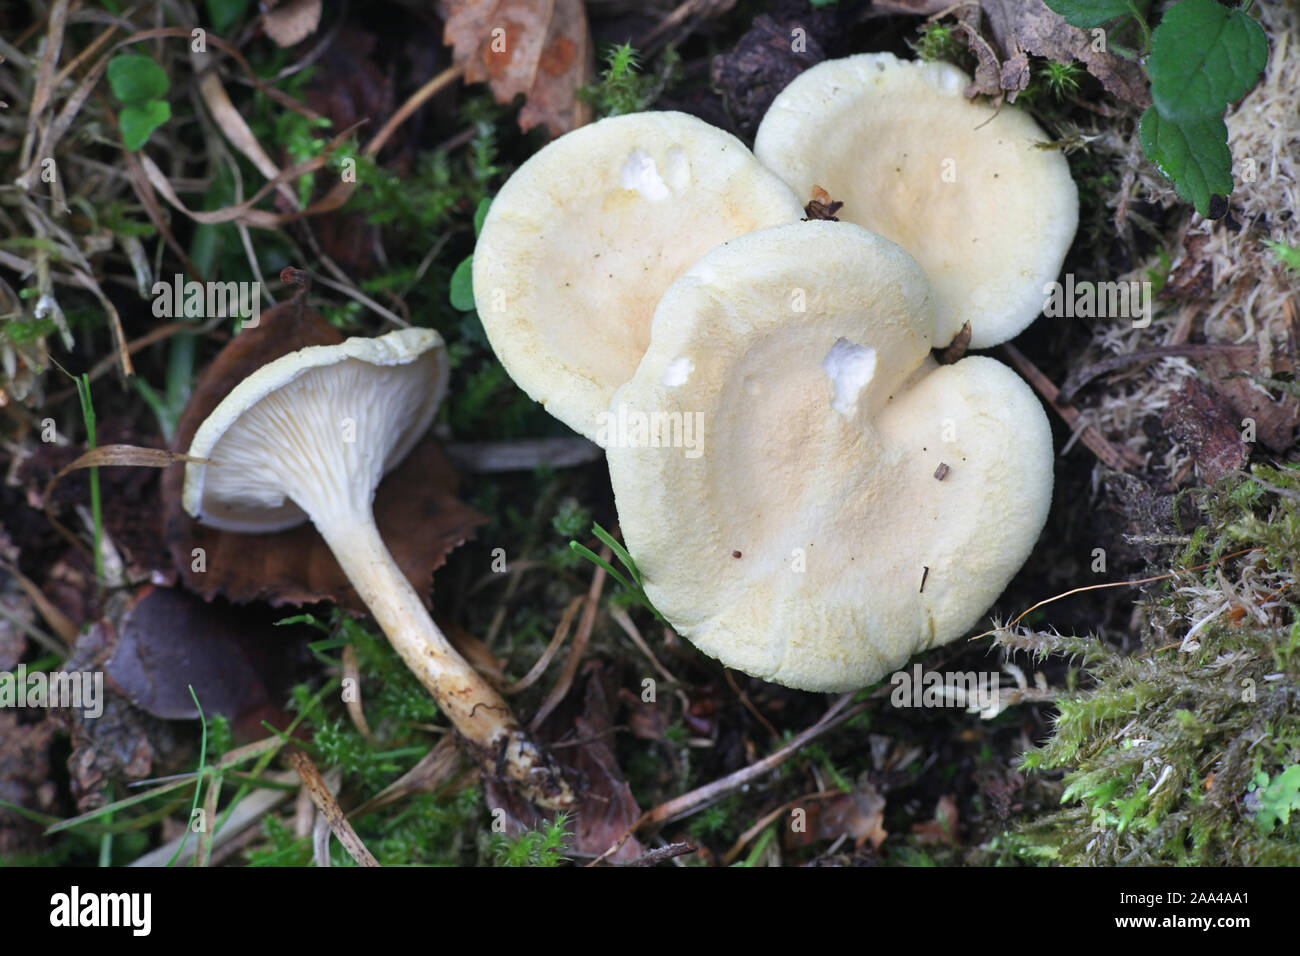 Hygrophoropsis pallida or H. aurantiaca var. macrospora, known as the false chanterelle, wild mushrooms from Finland Stock Photo